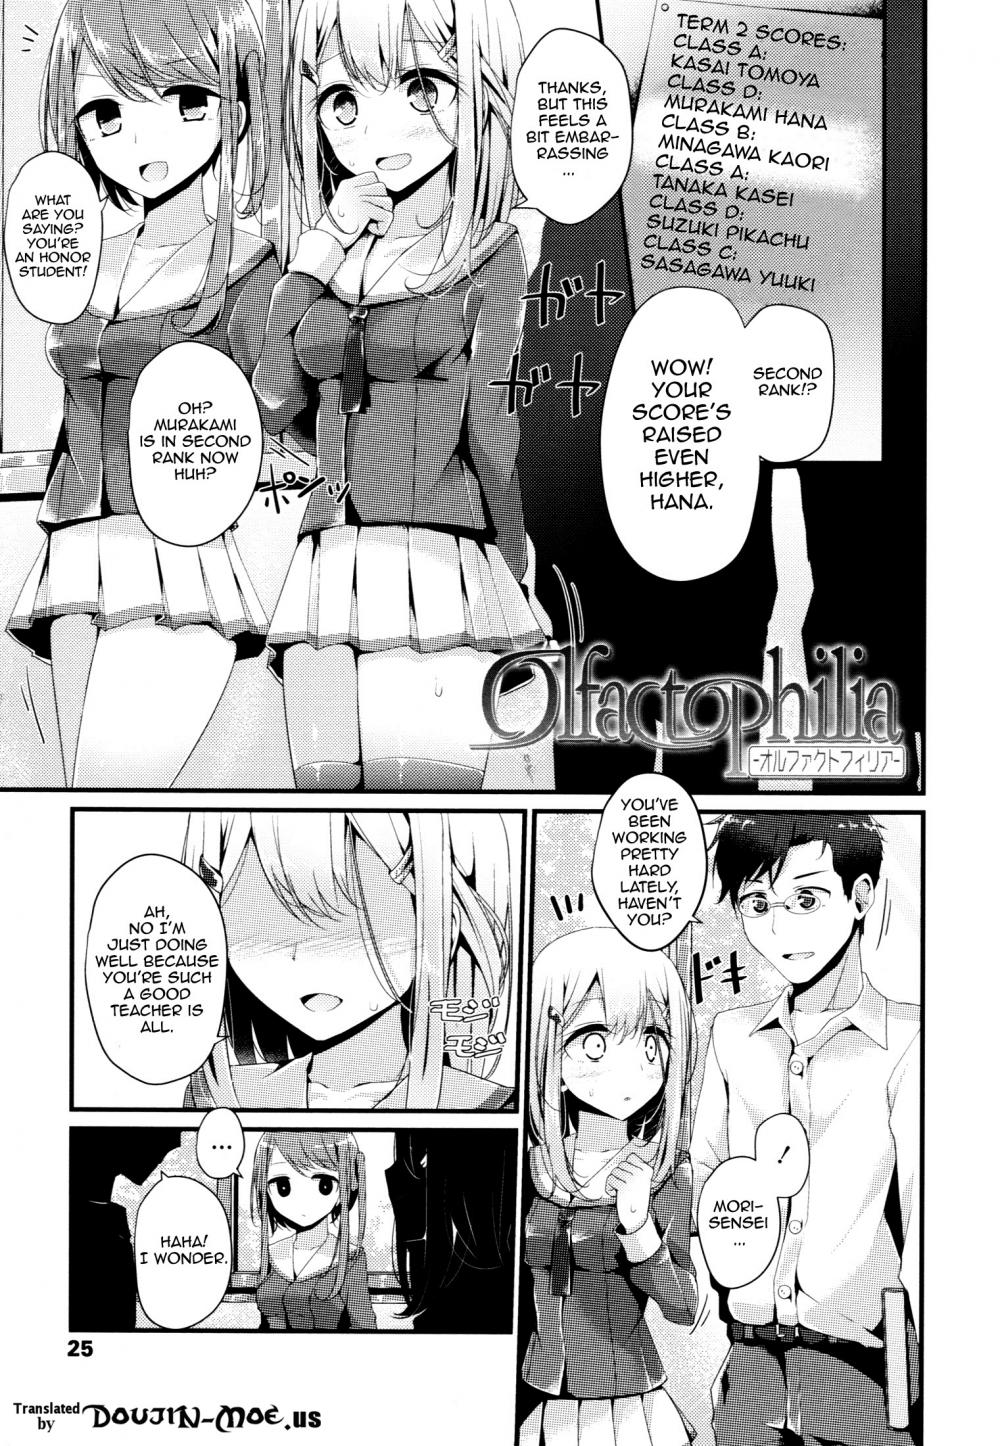 Hentai Manga Comic-Ashikokism-Chapter 2-1